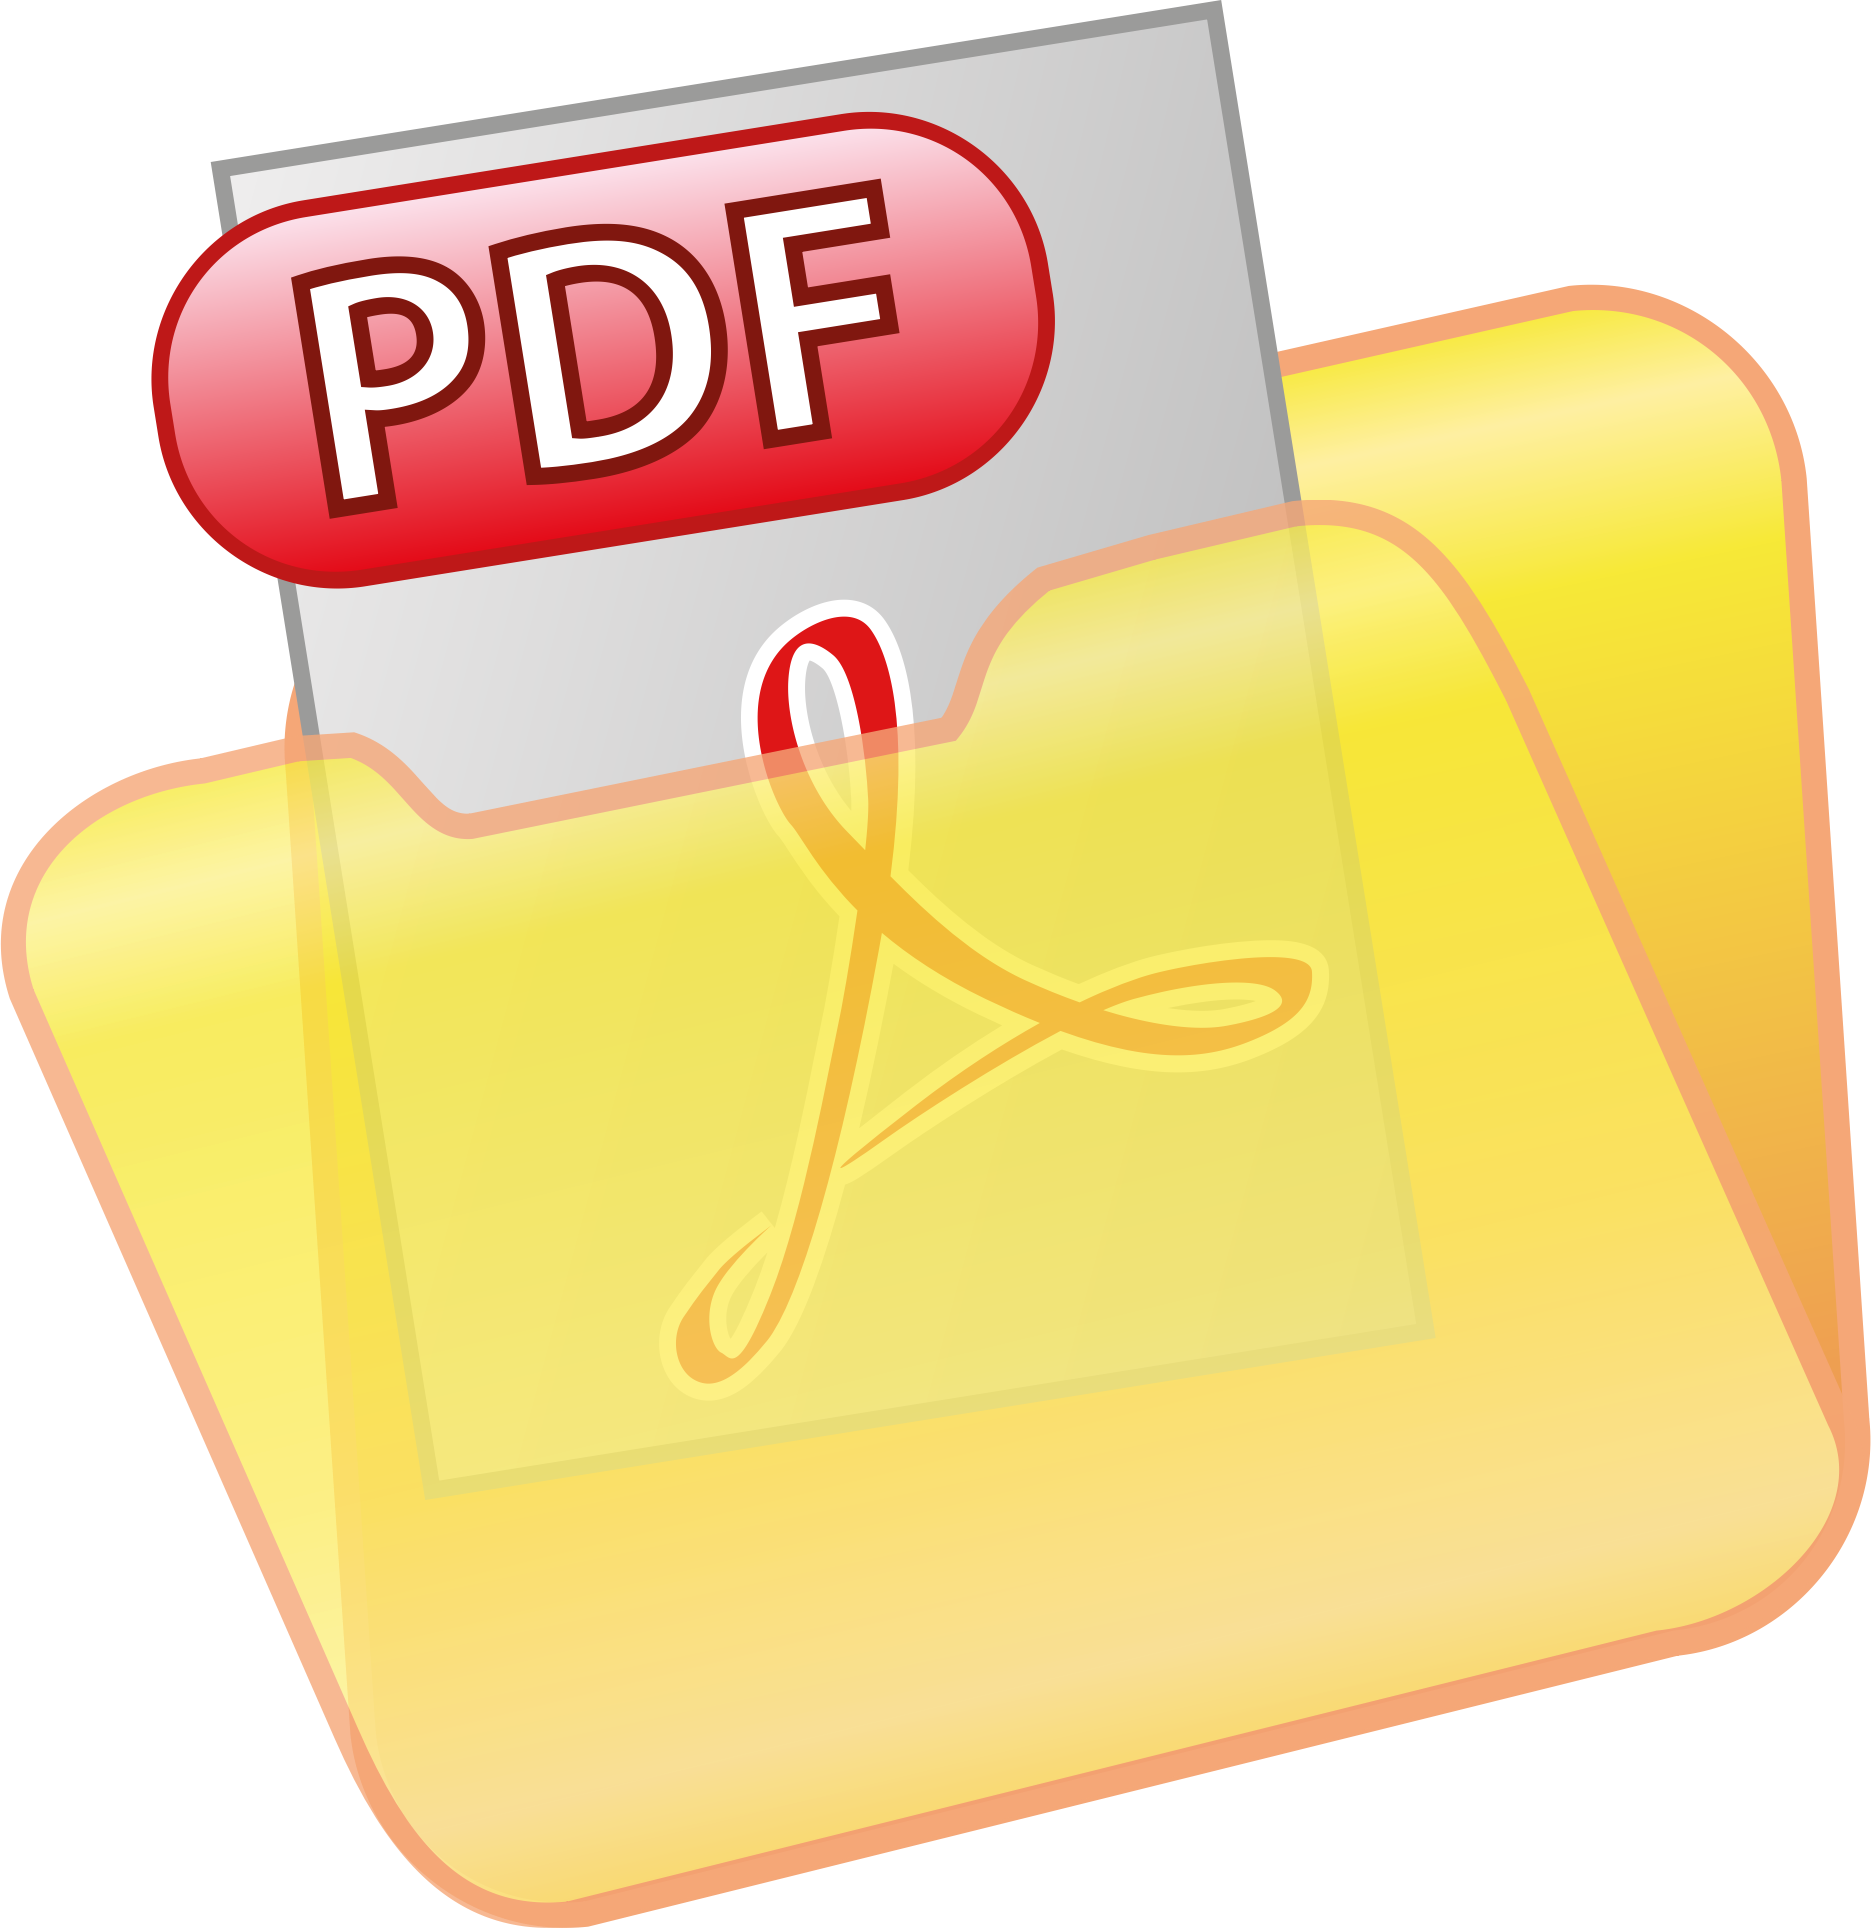 Иконка файла. Значок пдф. Иконка документа pdf. Файл на прозрачном фоне.